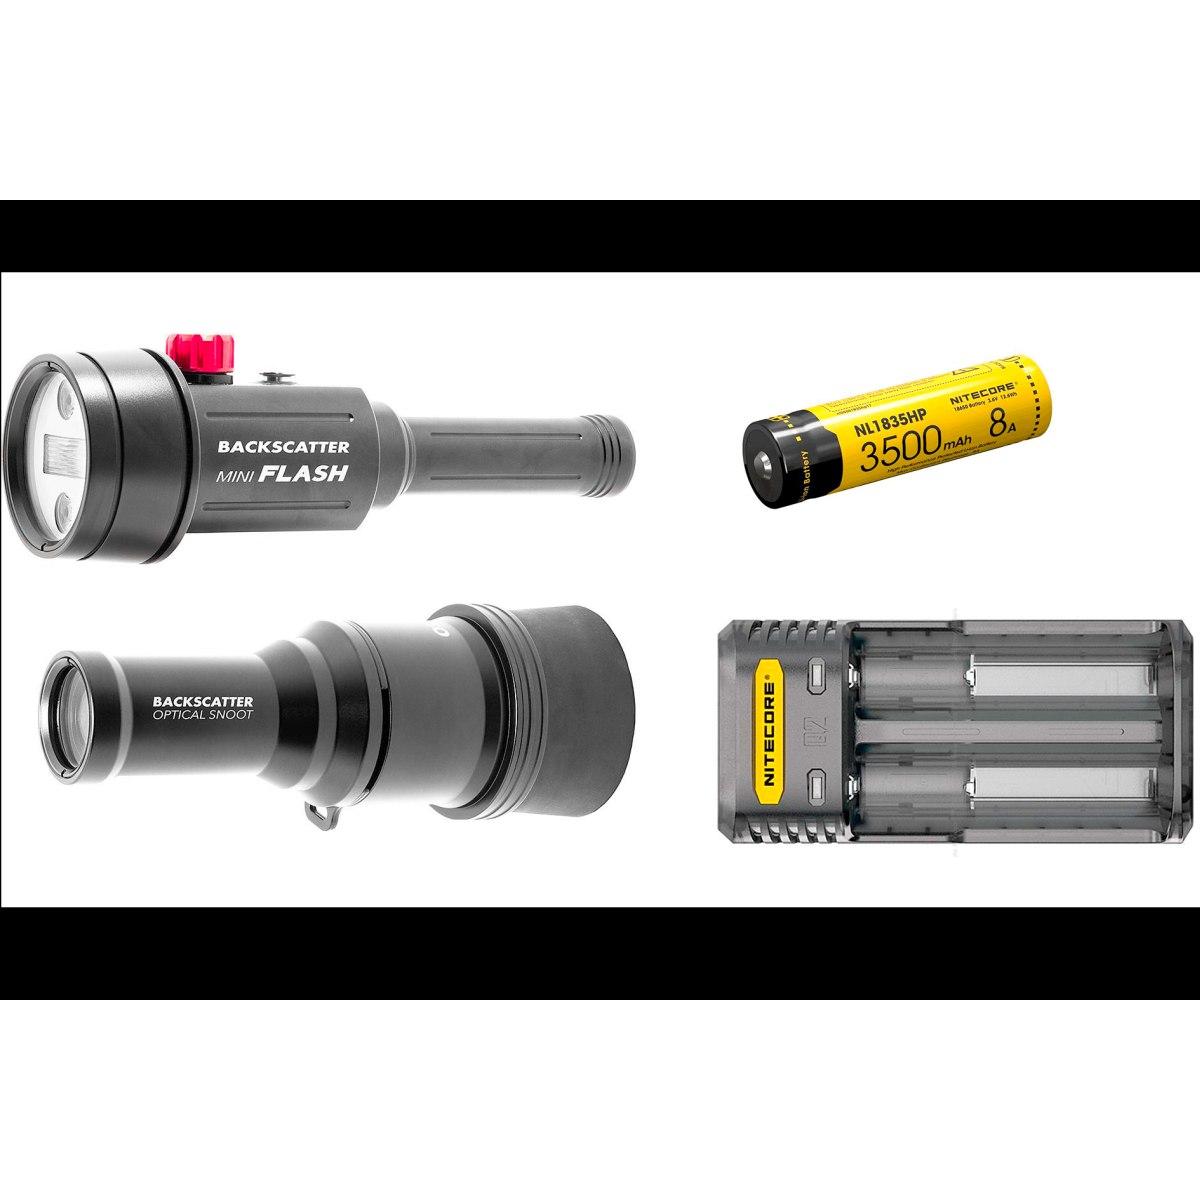 Backscatter mini flash MF-1 + Snoot Optical Snoot OS-1 + Batteria e Caricabatterie